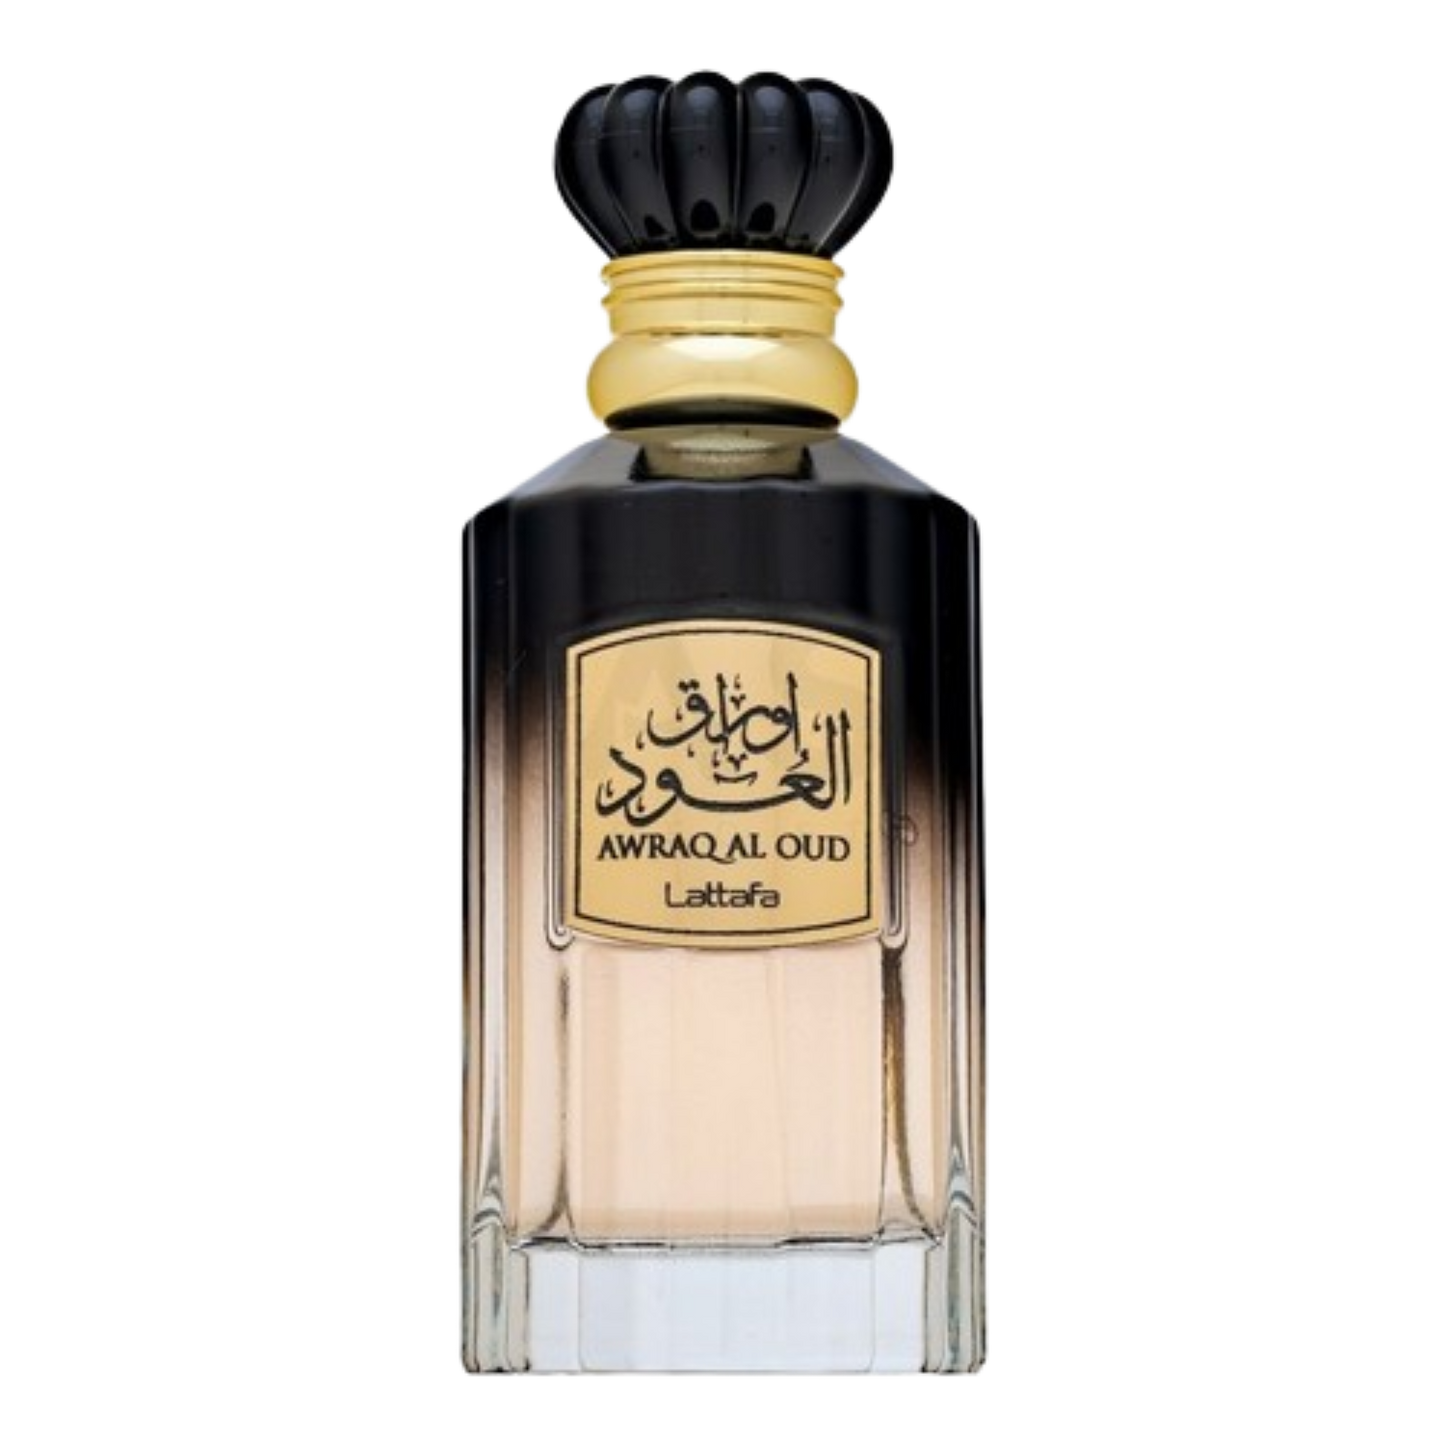 Lattafa Awraq Al Oud Apa de Parfum unisex 100 ml